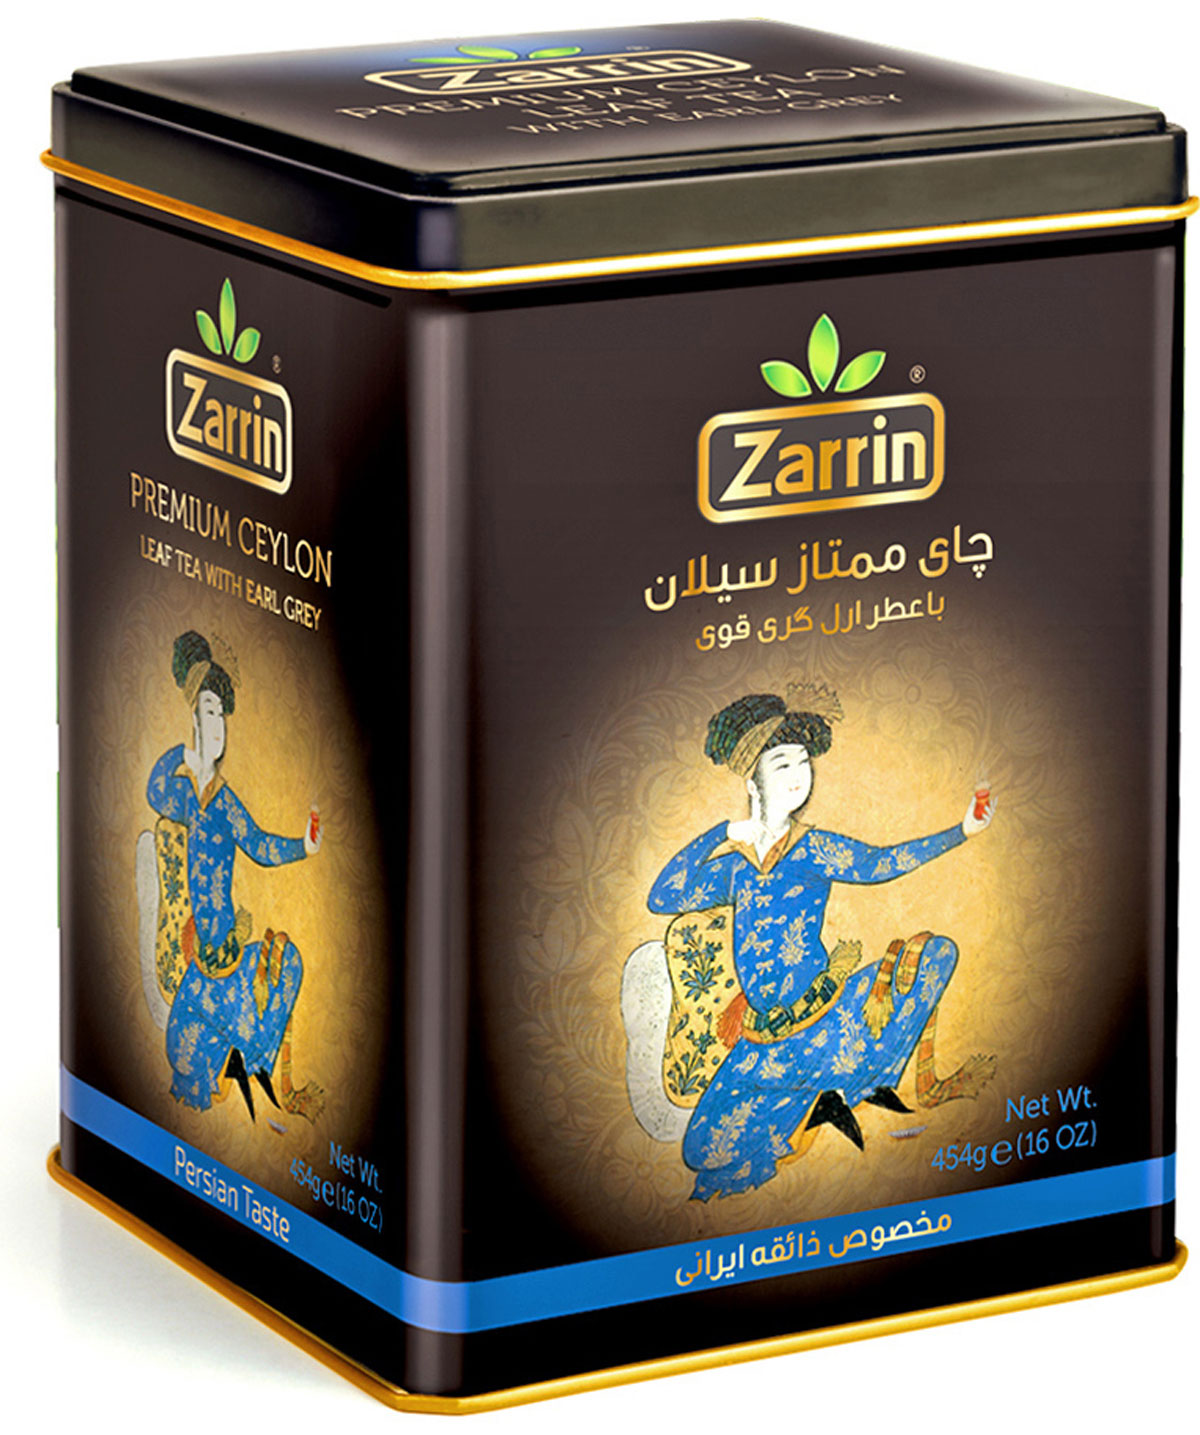 Zarrin Premium Earl Grey Tin